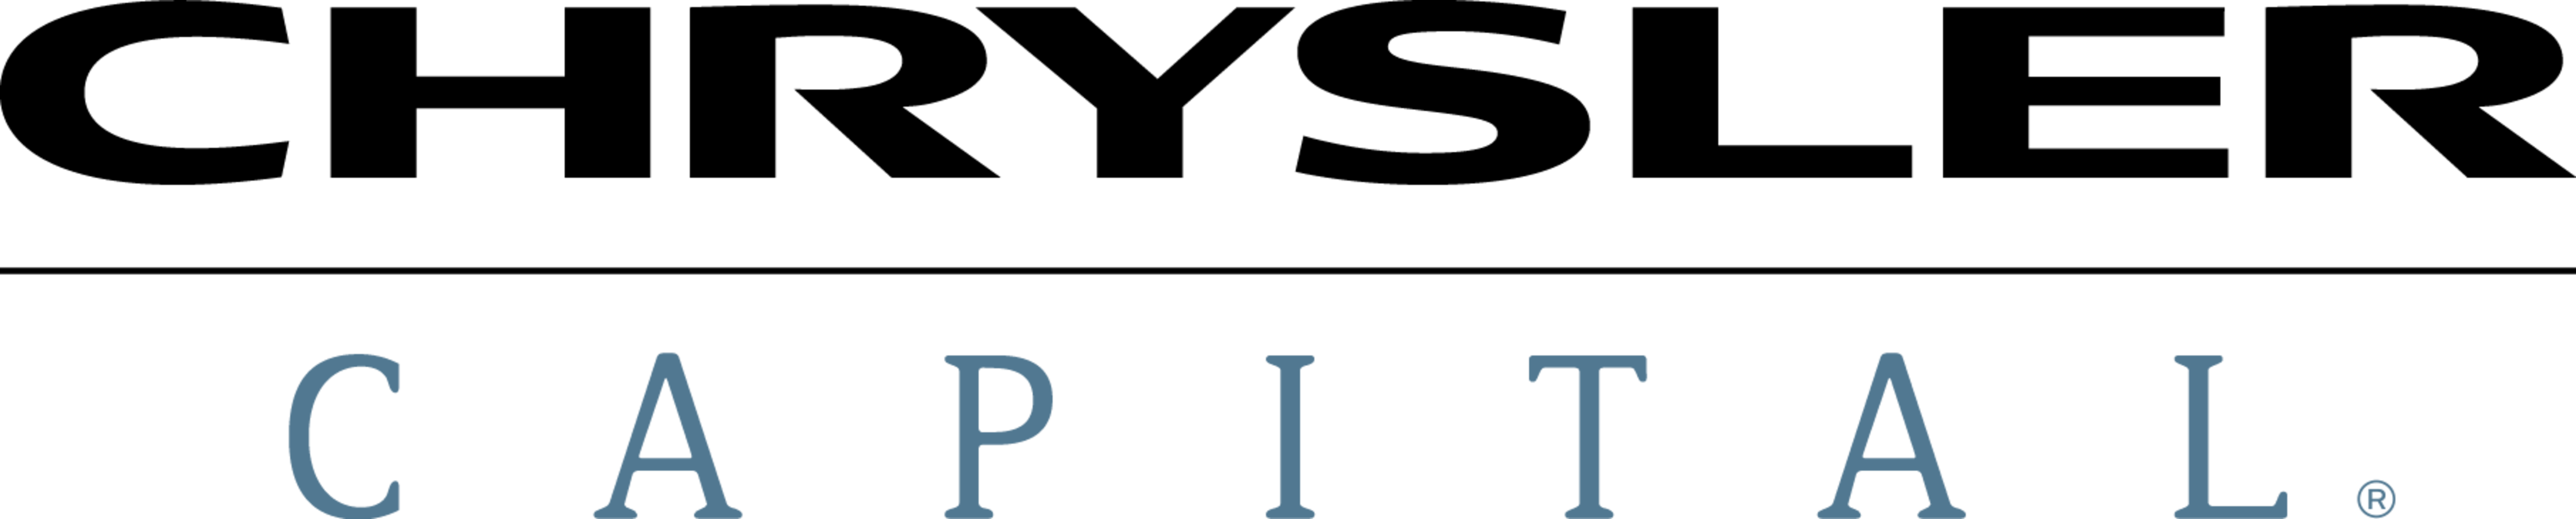 Chrysler Capital Logo (4909x989), Png Download